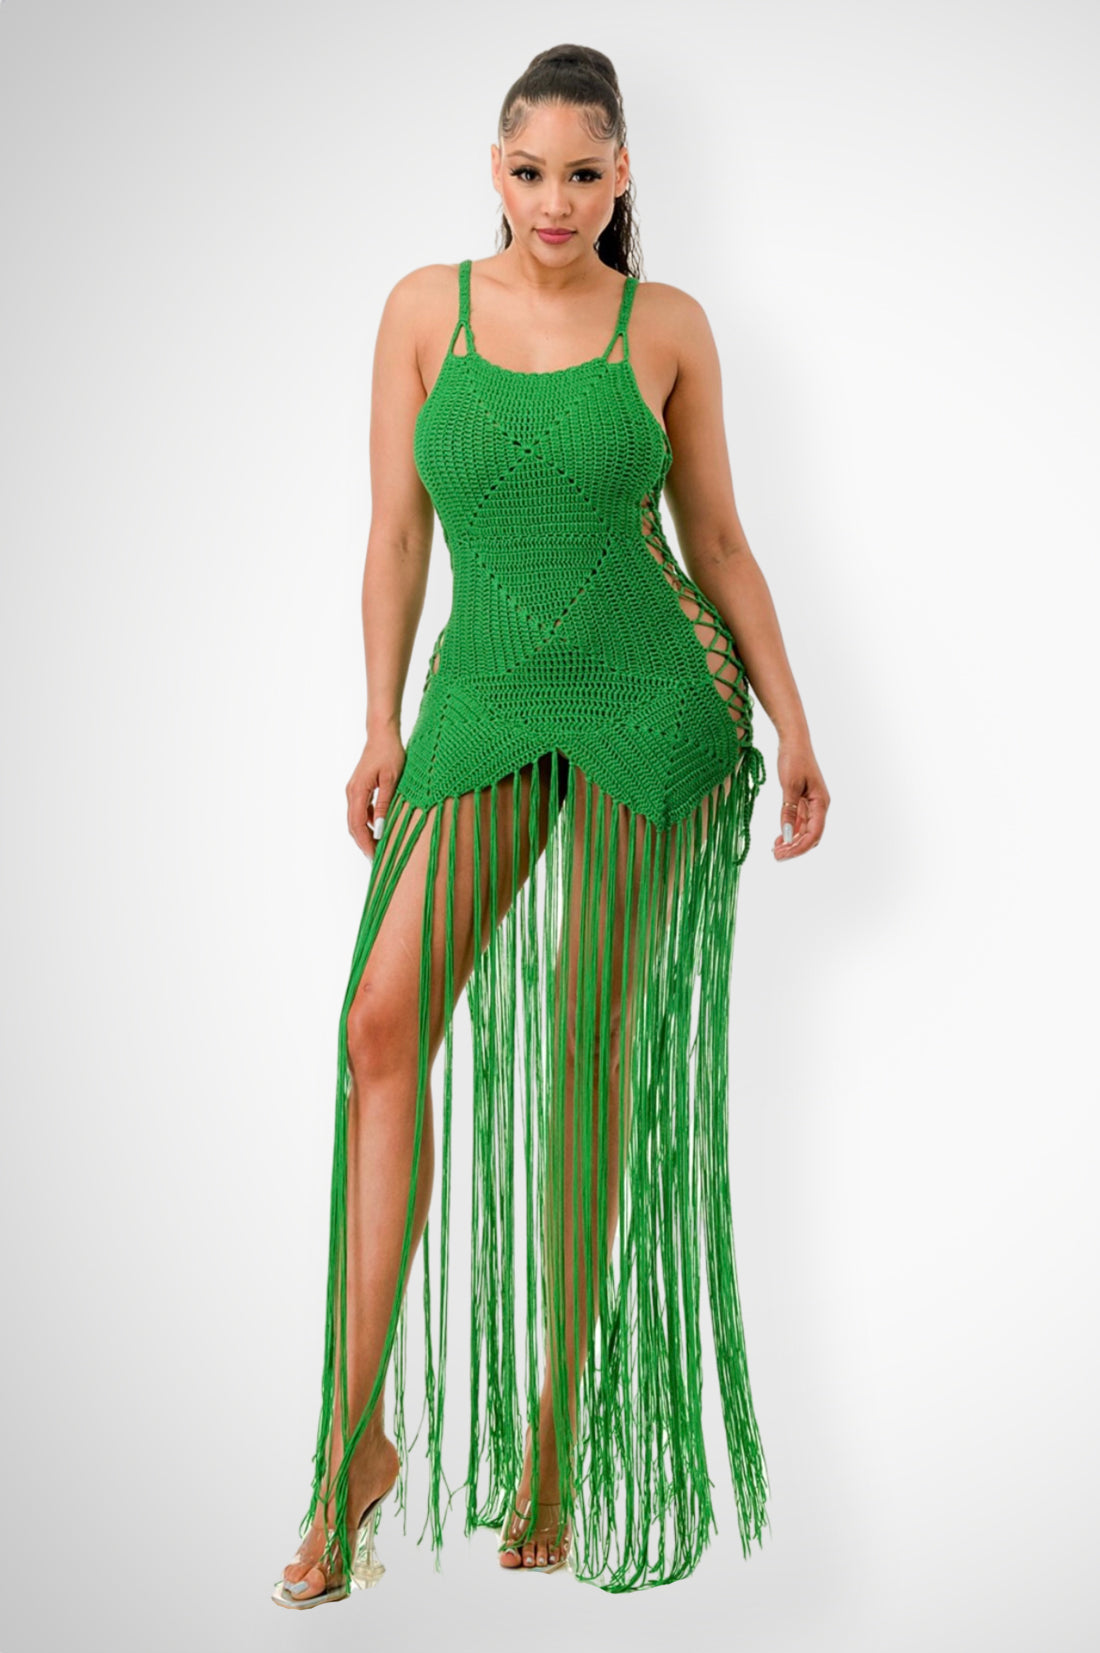 PoundCake Emerald Delight Crochet Dress